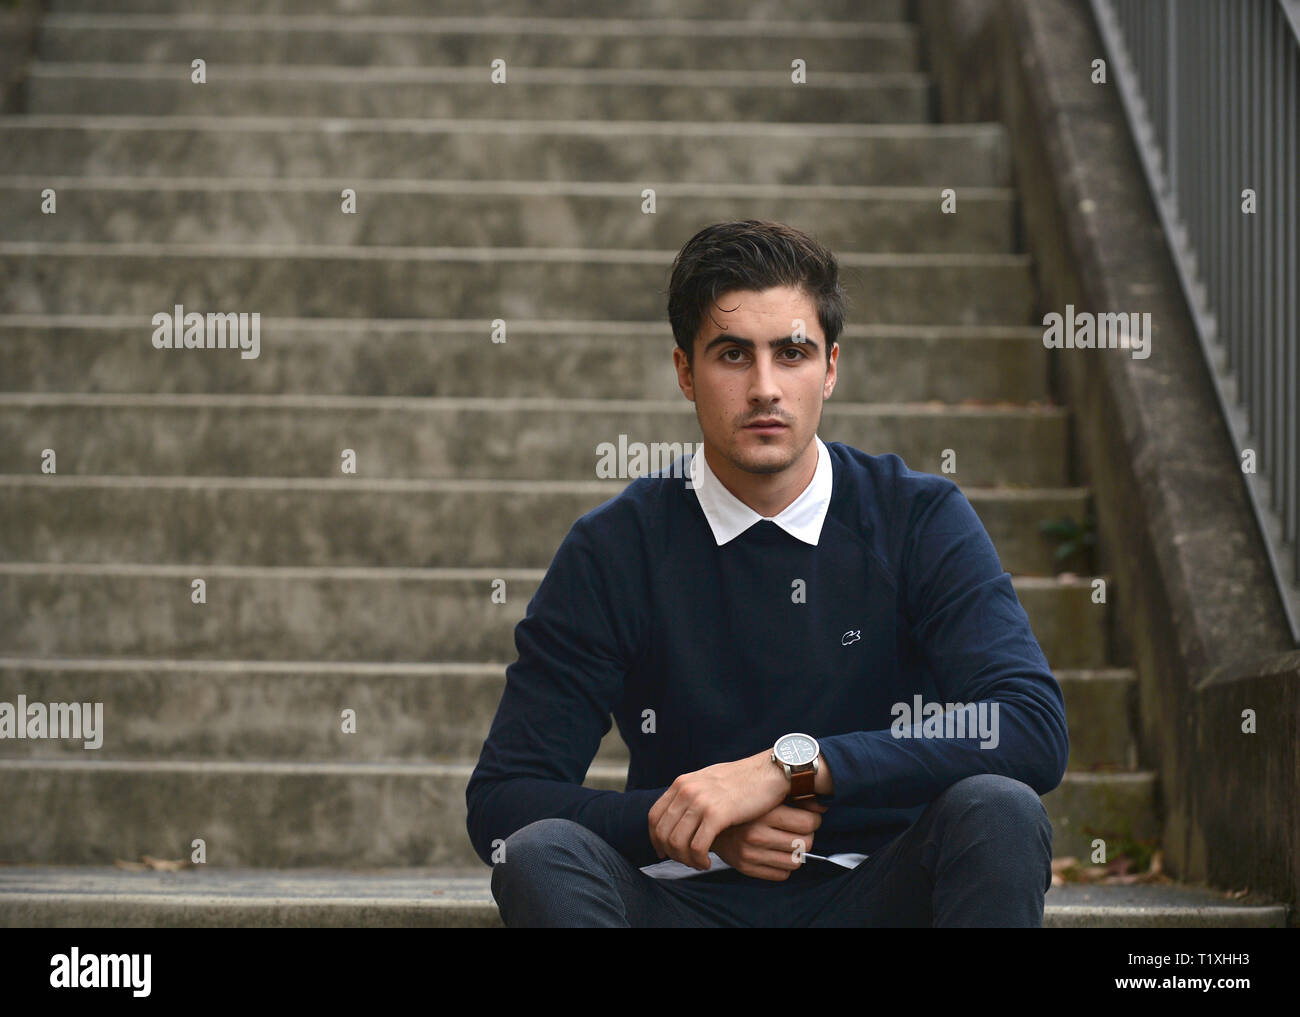 Man Sitting on Stairs, Pyrmont Sydney Stock Photo